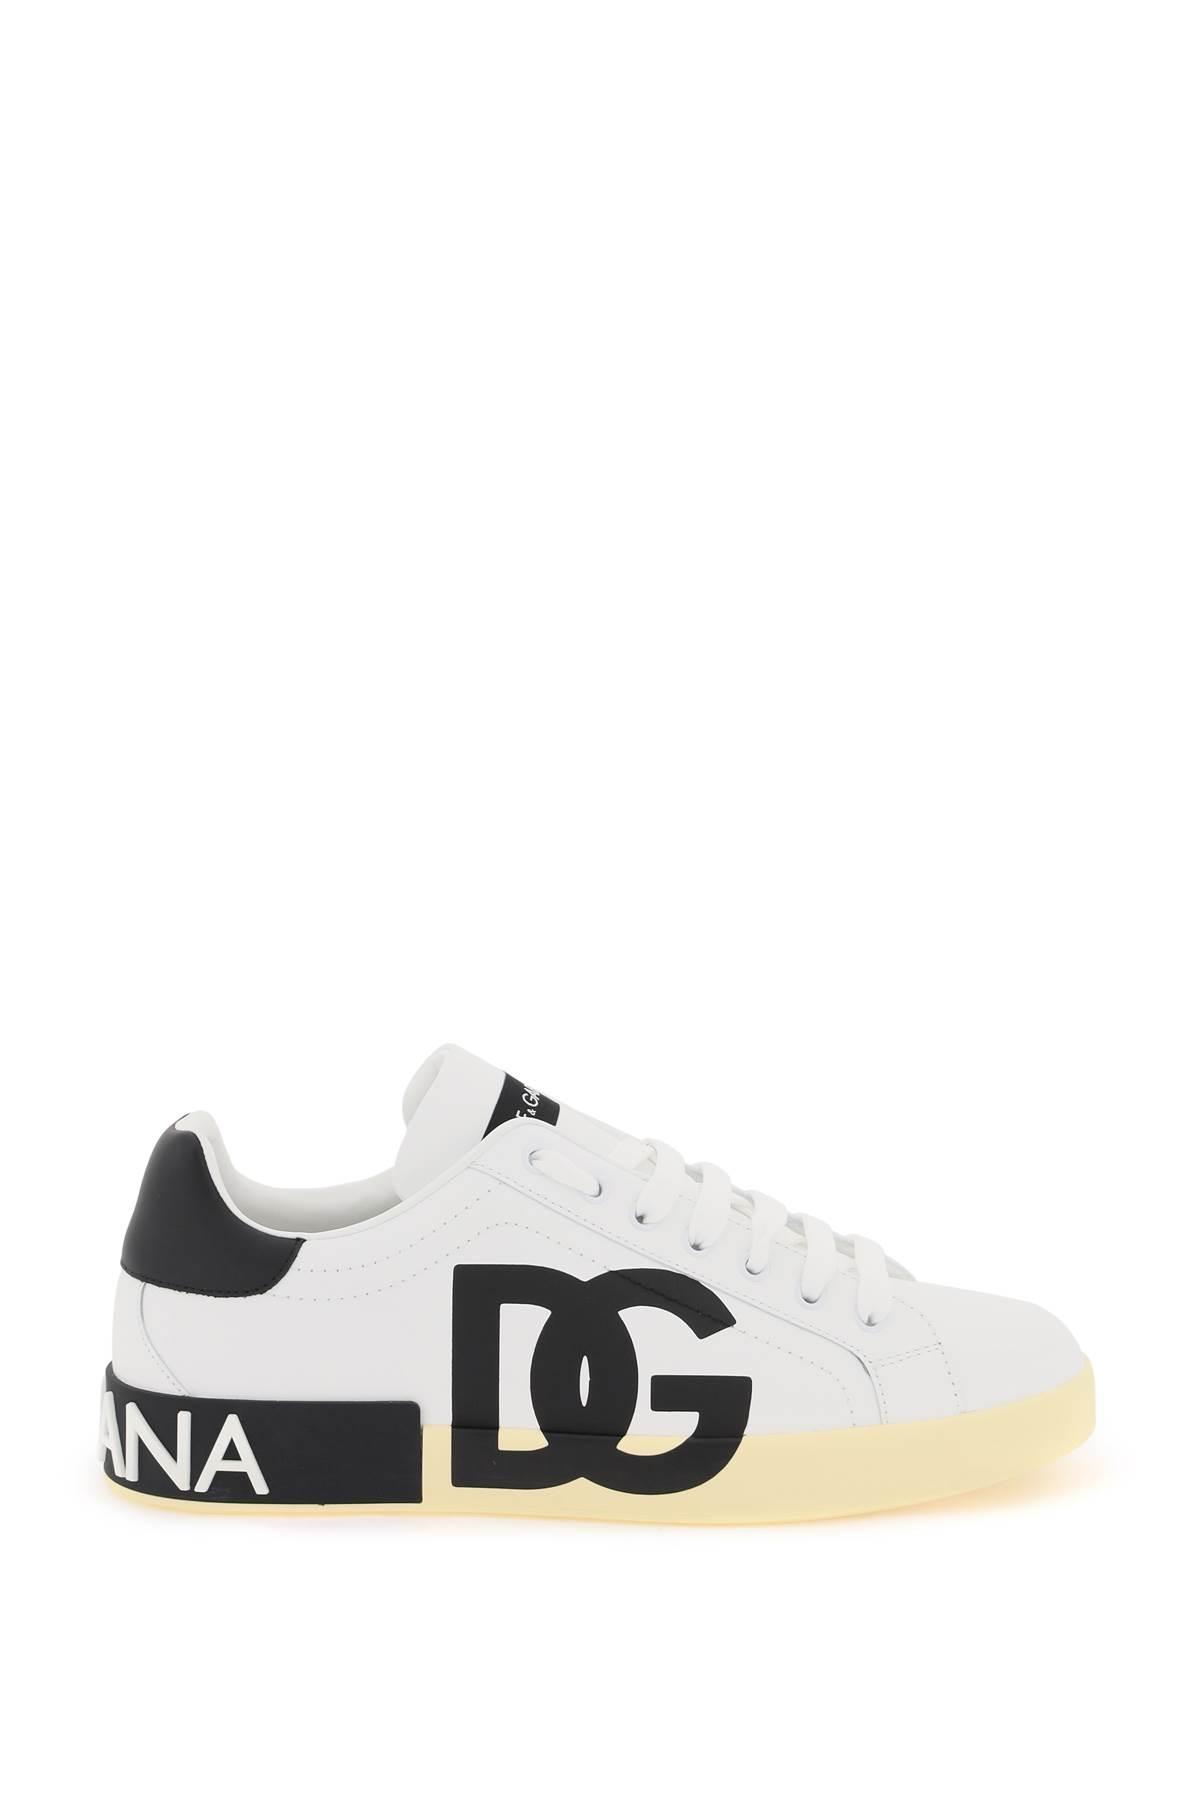 DOLCE & GABBANA Leather Portofino sneakers with DG logo